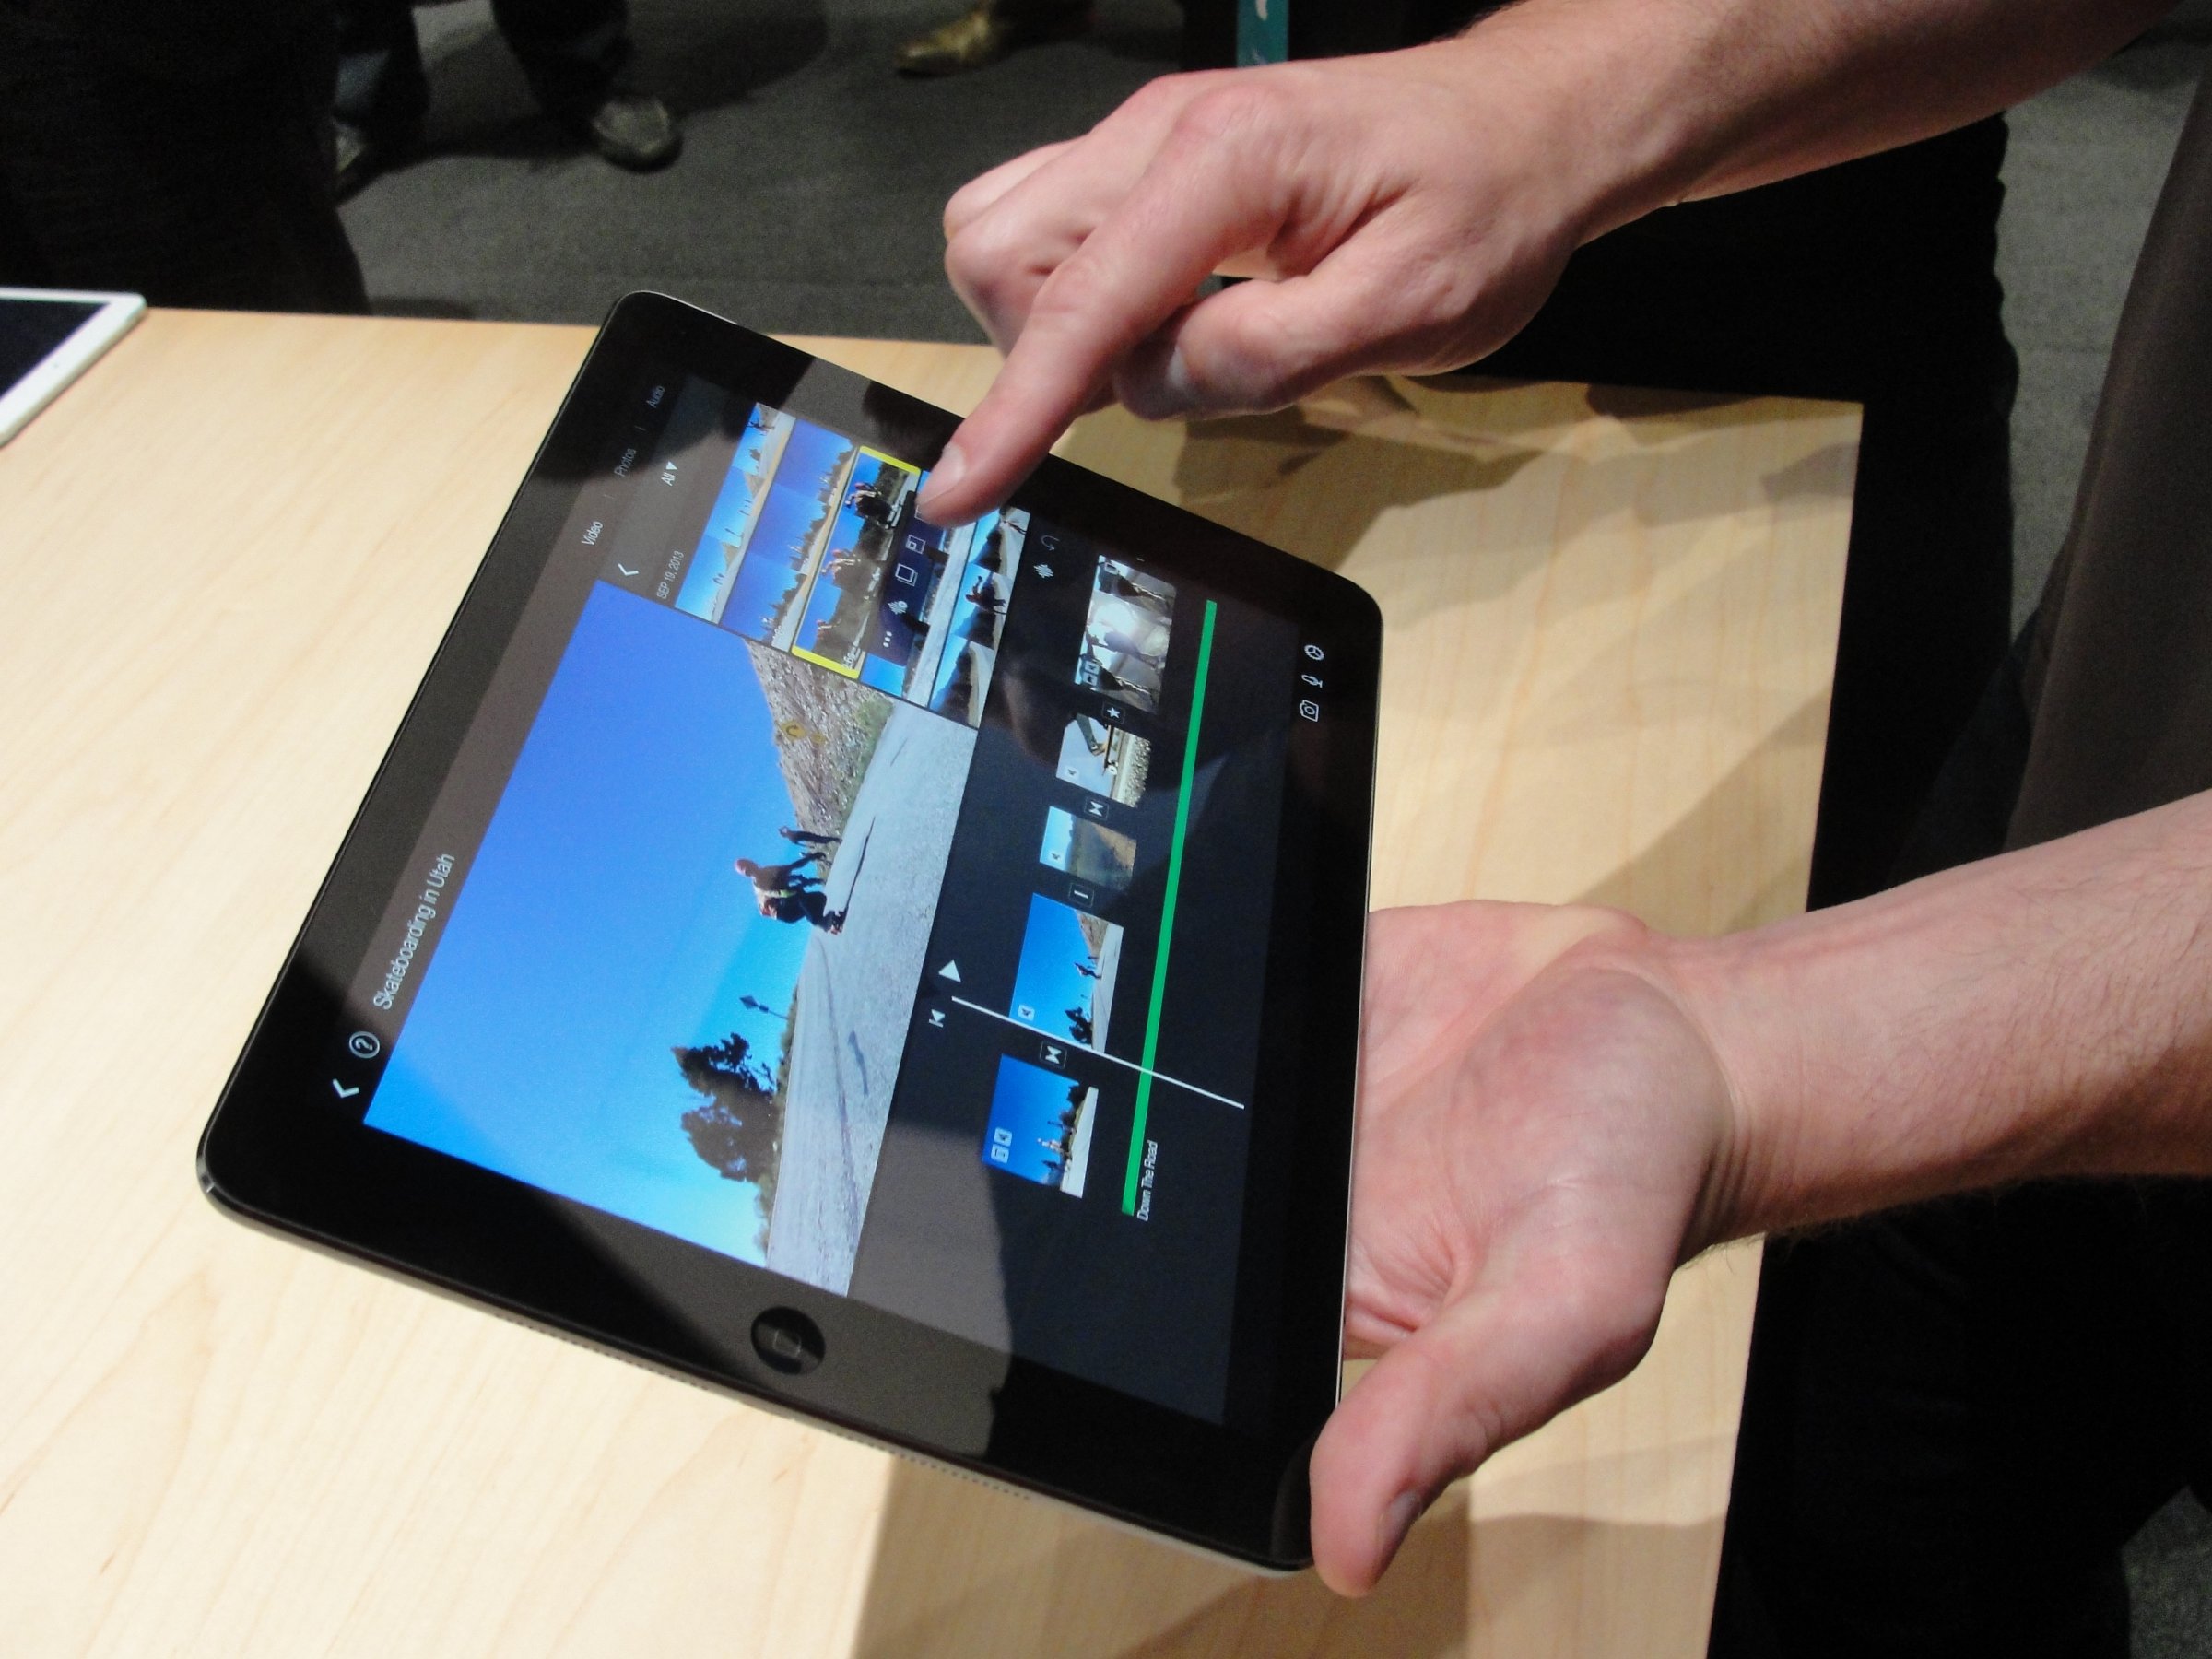 Apple's iPad Air tablet on October 22, 2013 in San Francisco, California.